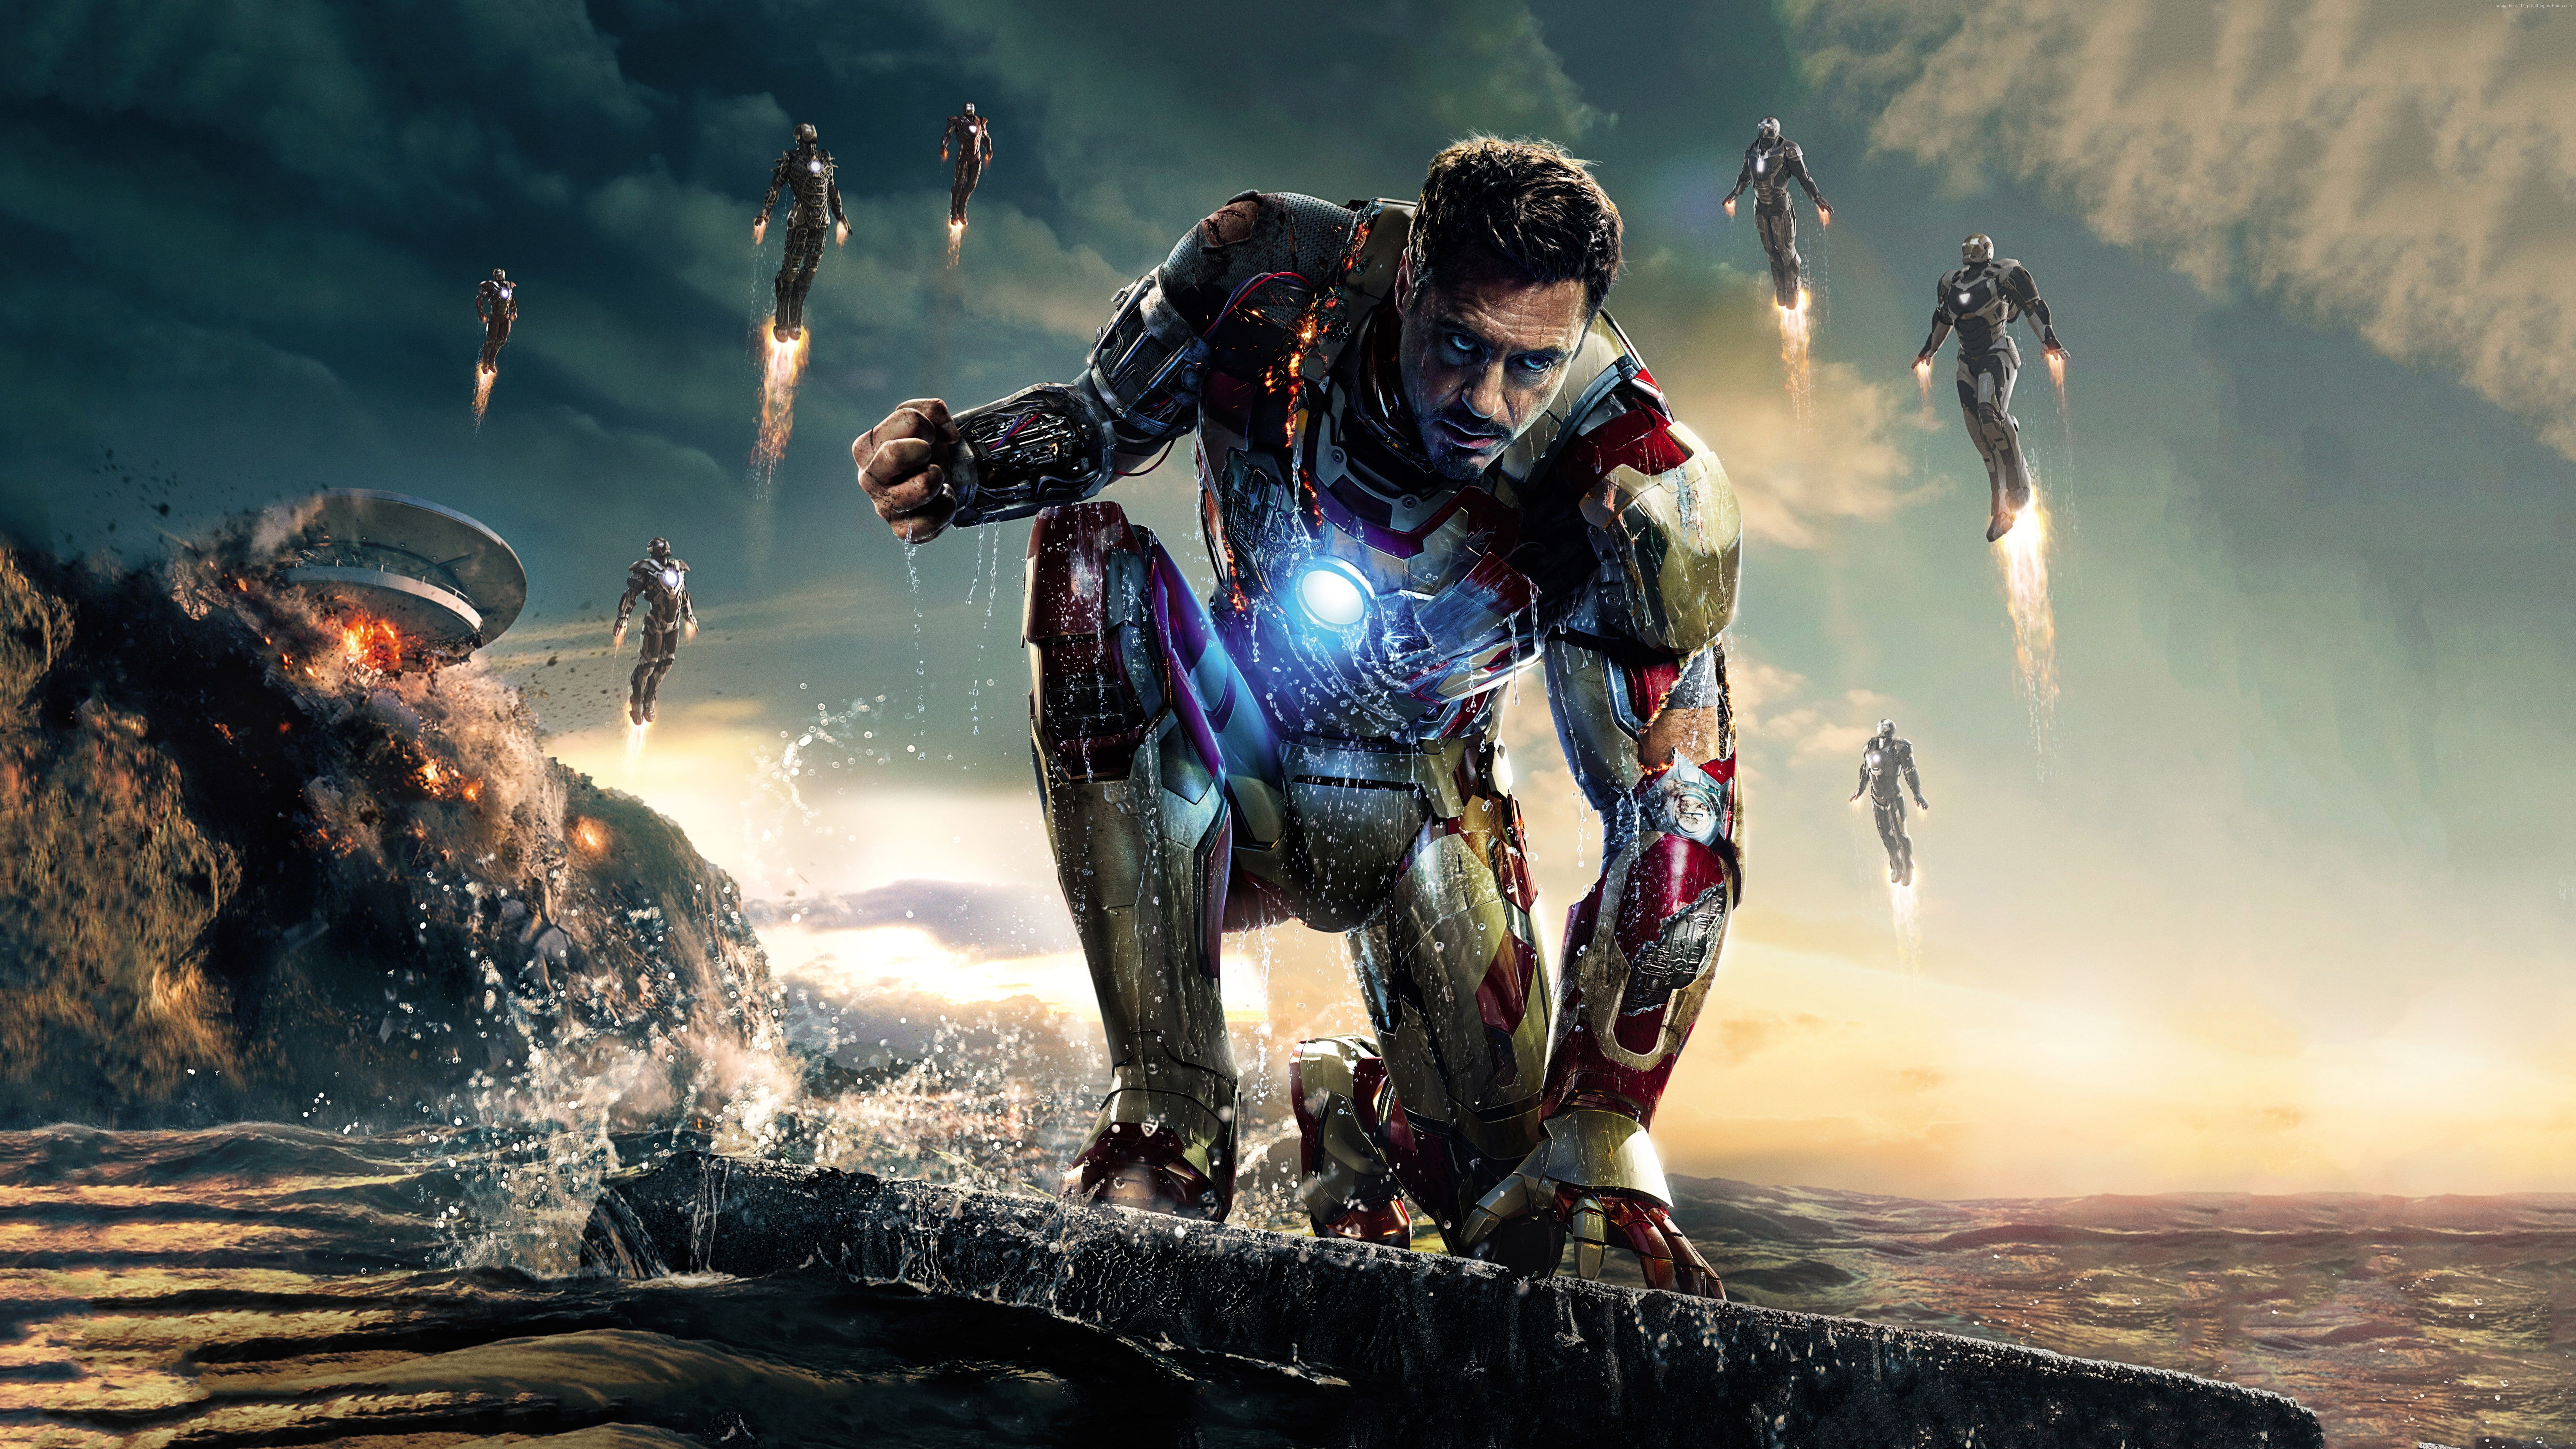 Avengers: Age of Ultron Iron Man Robert Downey Jr. Avengers 2 #Poster Tony Stark K #wallpaper #hdwallpaper #de. Iron man wallpaper, Avengers wallpaper, Iron man